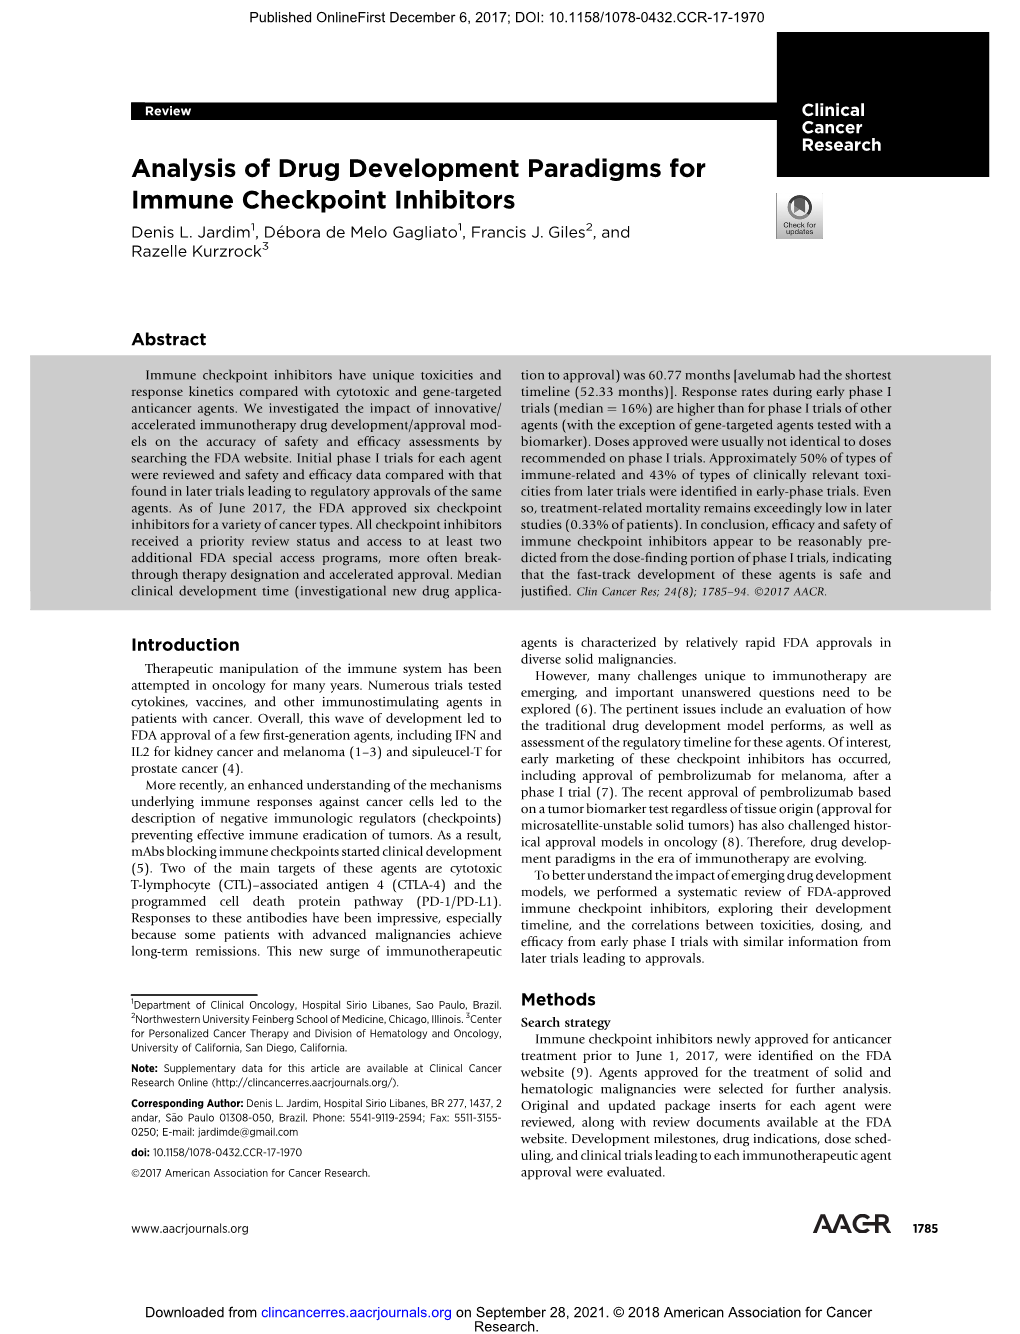 Analysis of Drug Development Paradigms for Immune Checkpoint Inhibitors Denis L